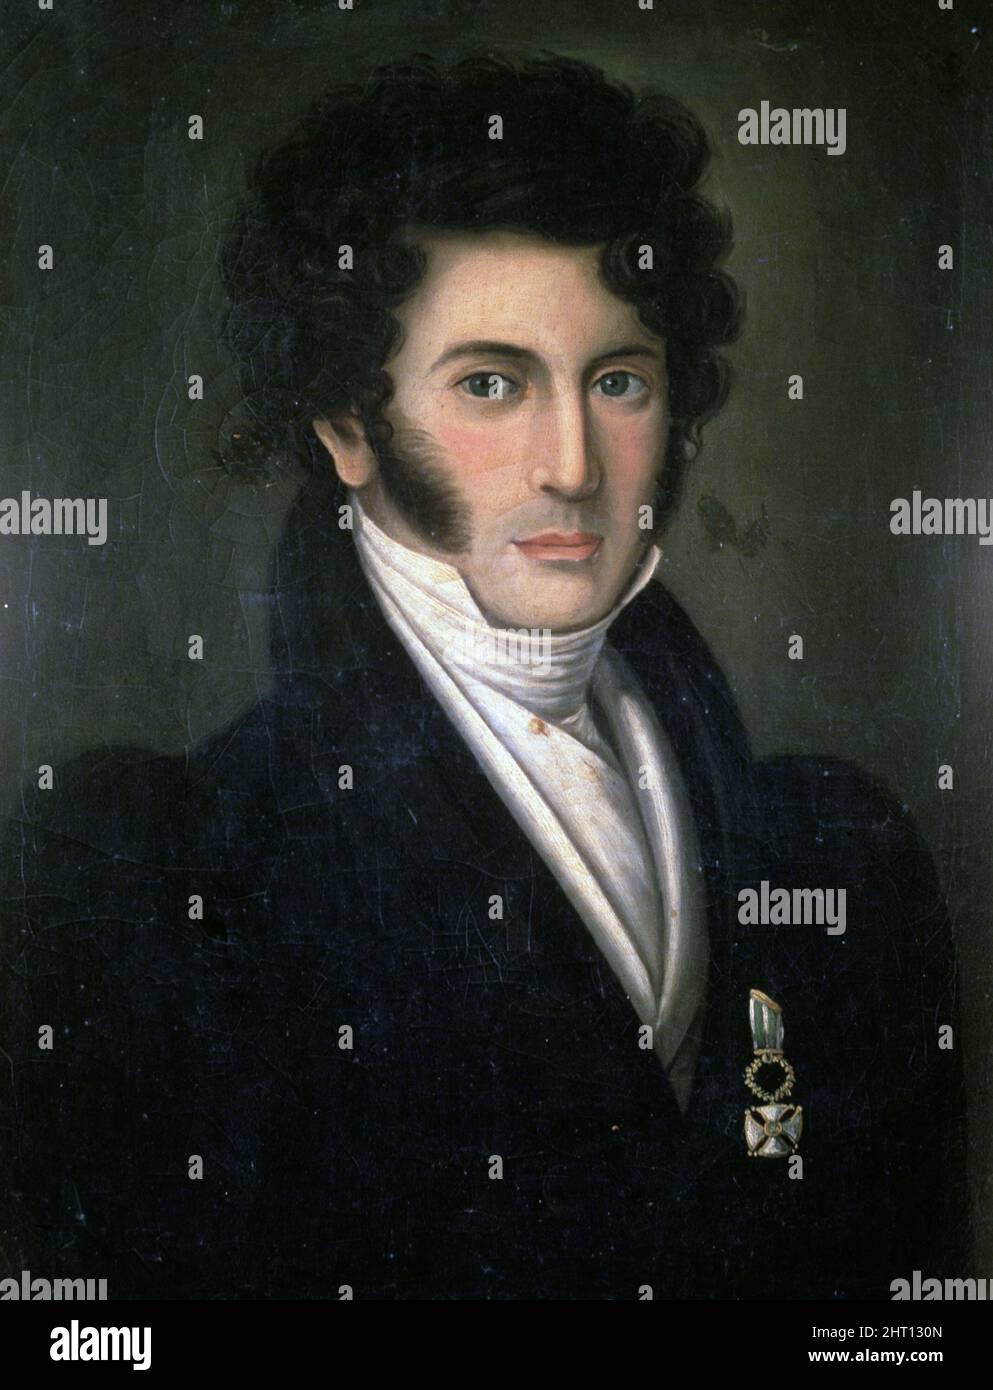 JOSÉ ALVAREZ DE MENDIZABAL. POLITICO ESPAÑOL.1790 - 1853. PRESIDENTE DEL CONSEJO DE MINISTROS 1836. OLEO ANONIMO. MUSEO HISTÓRICO MUNICIPAL. CÁDIZ. Foto de stock